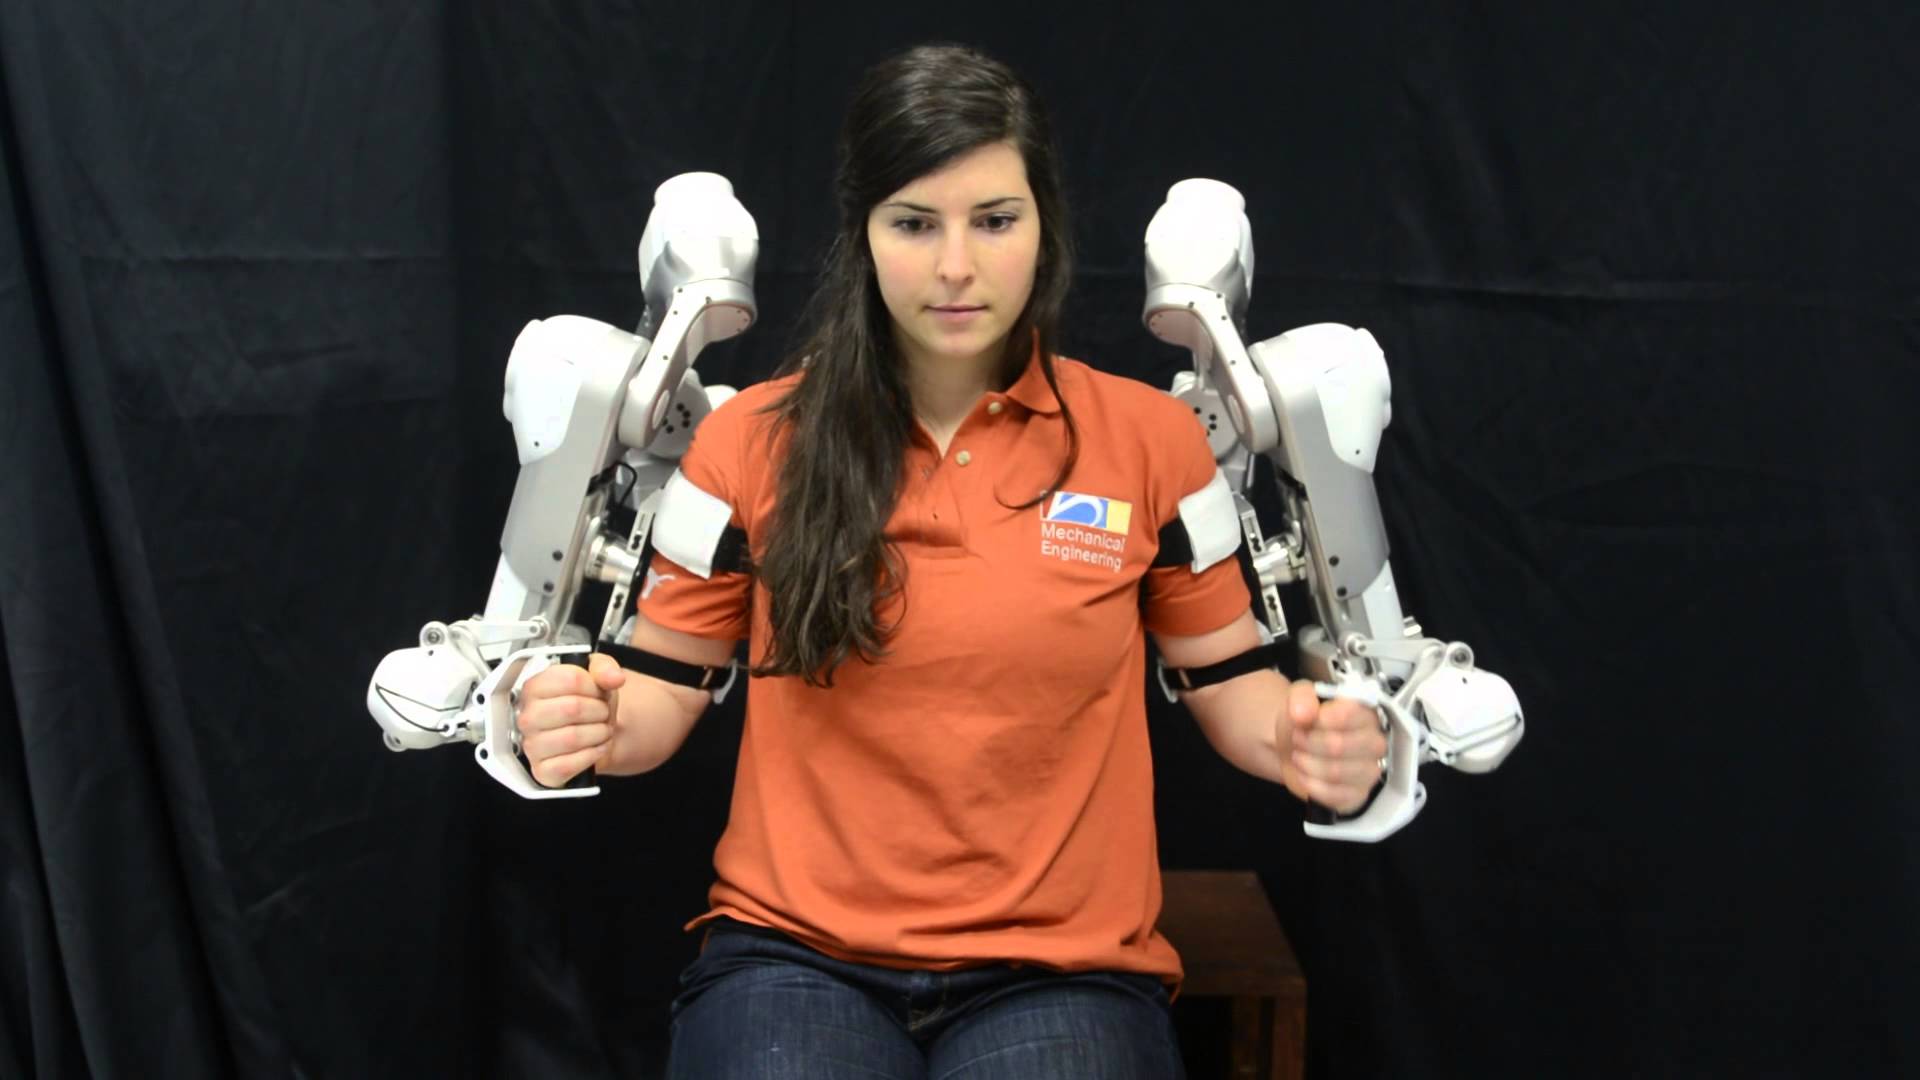 Introducing HARMONY, an Advanced Rehabilitation Robot